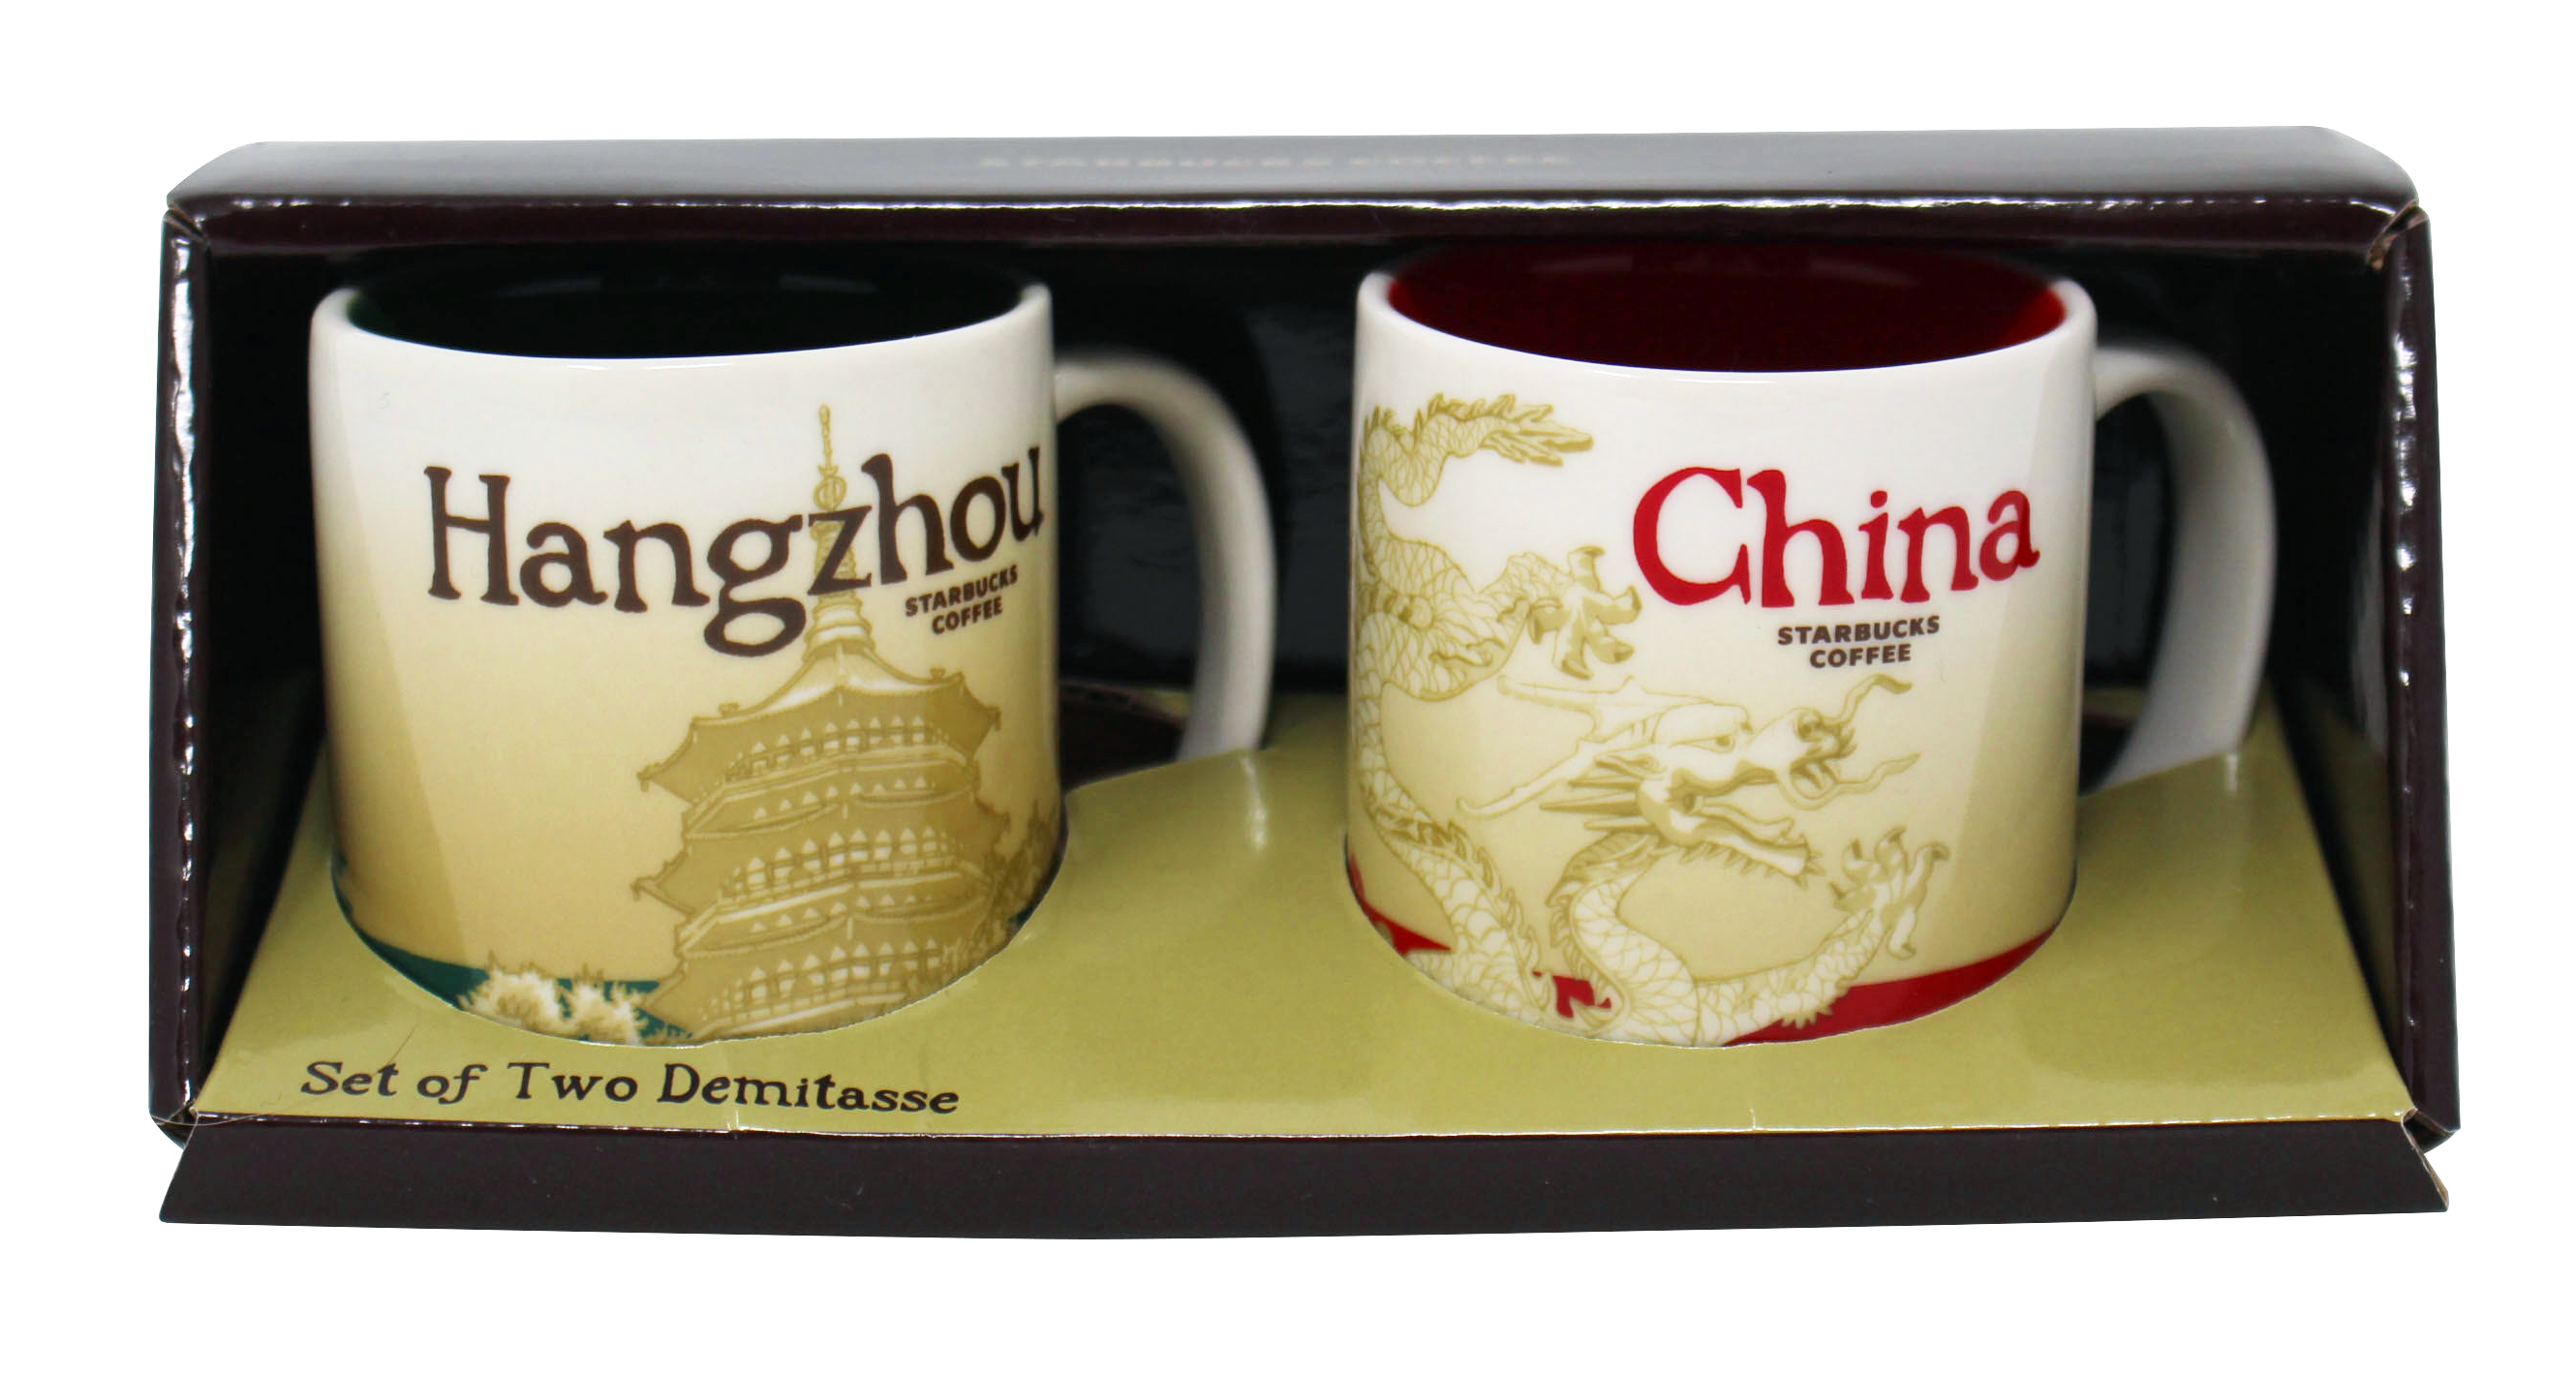 Starbucks Global Icon Series Hangzhou and China Demitasse Mugs, 3 Oz (Set of 2)